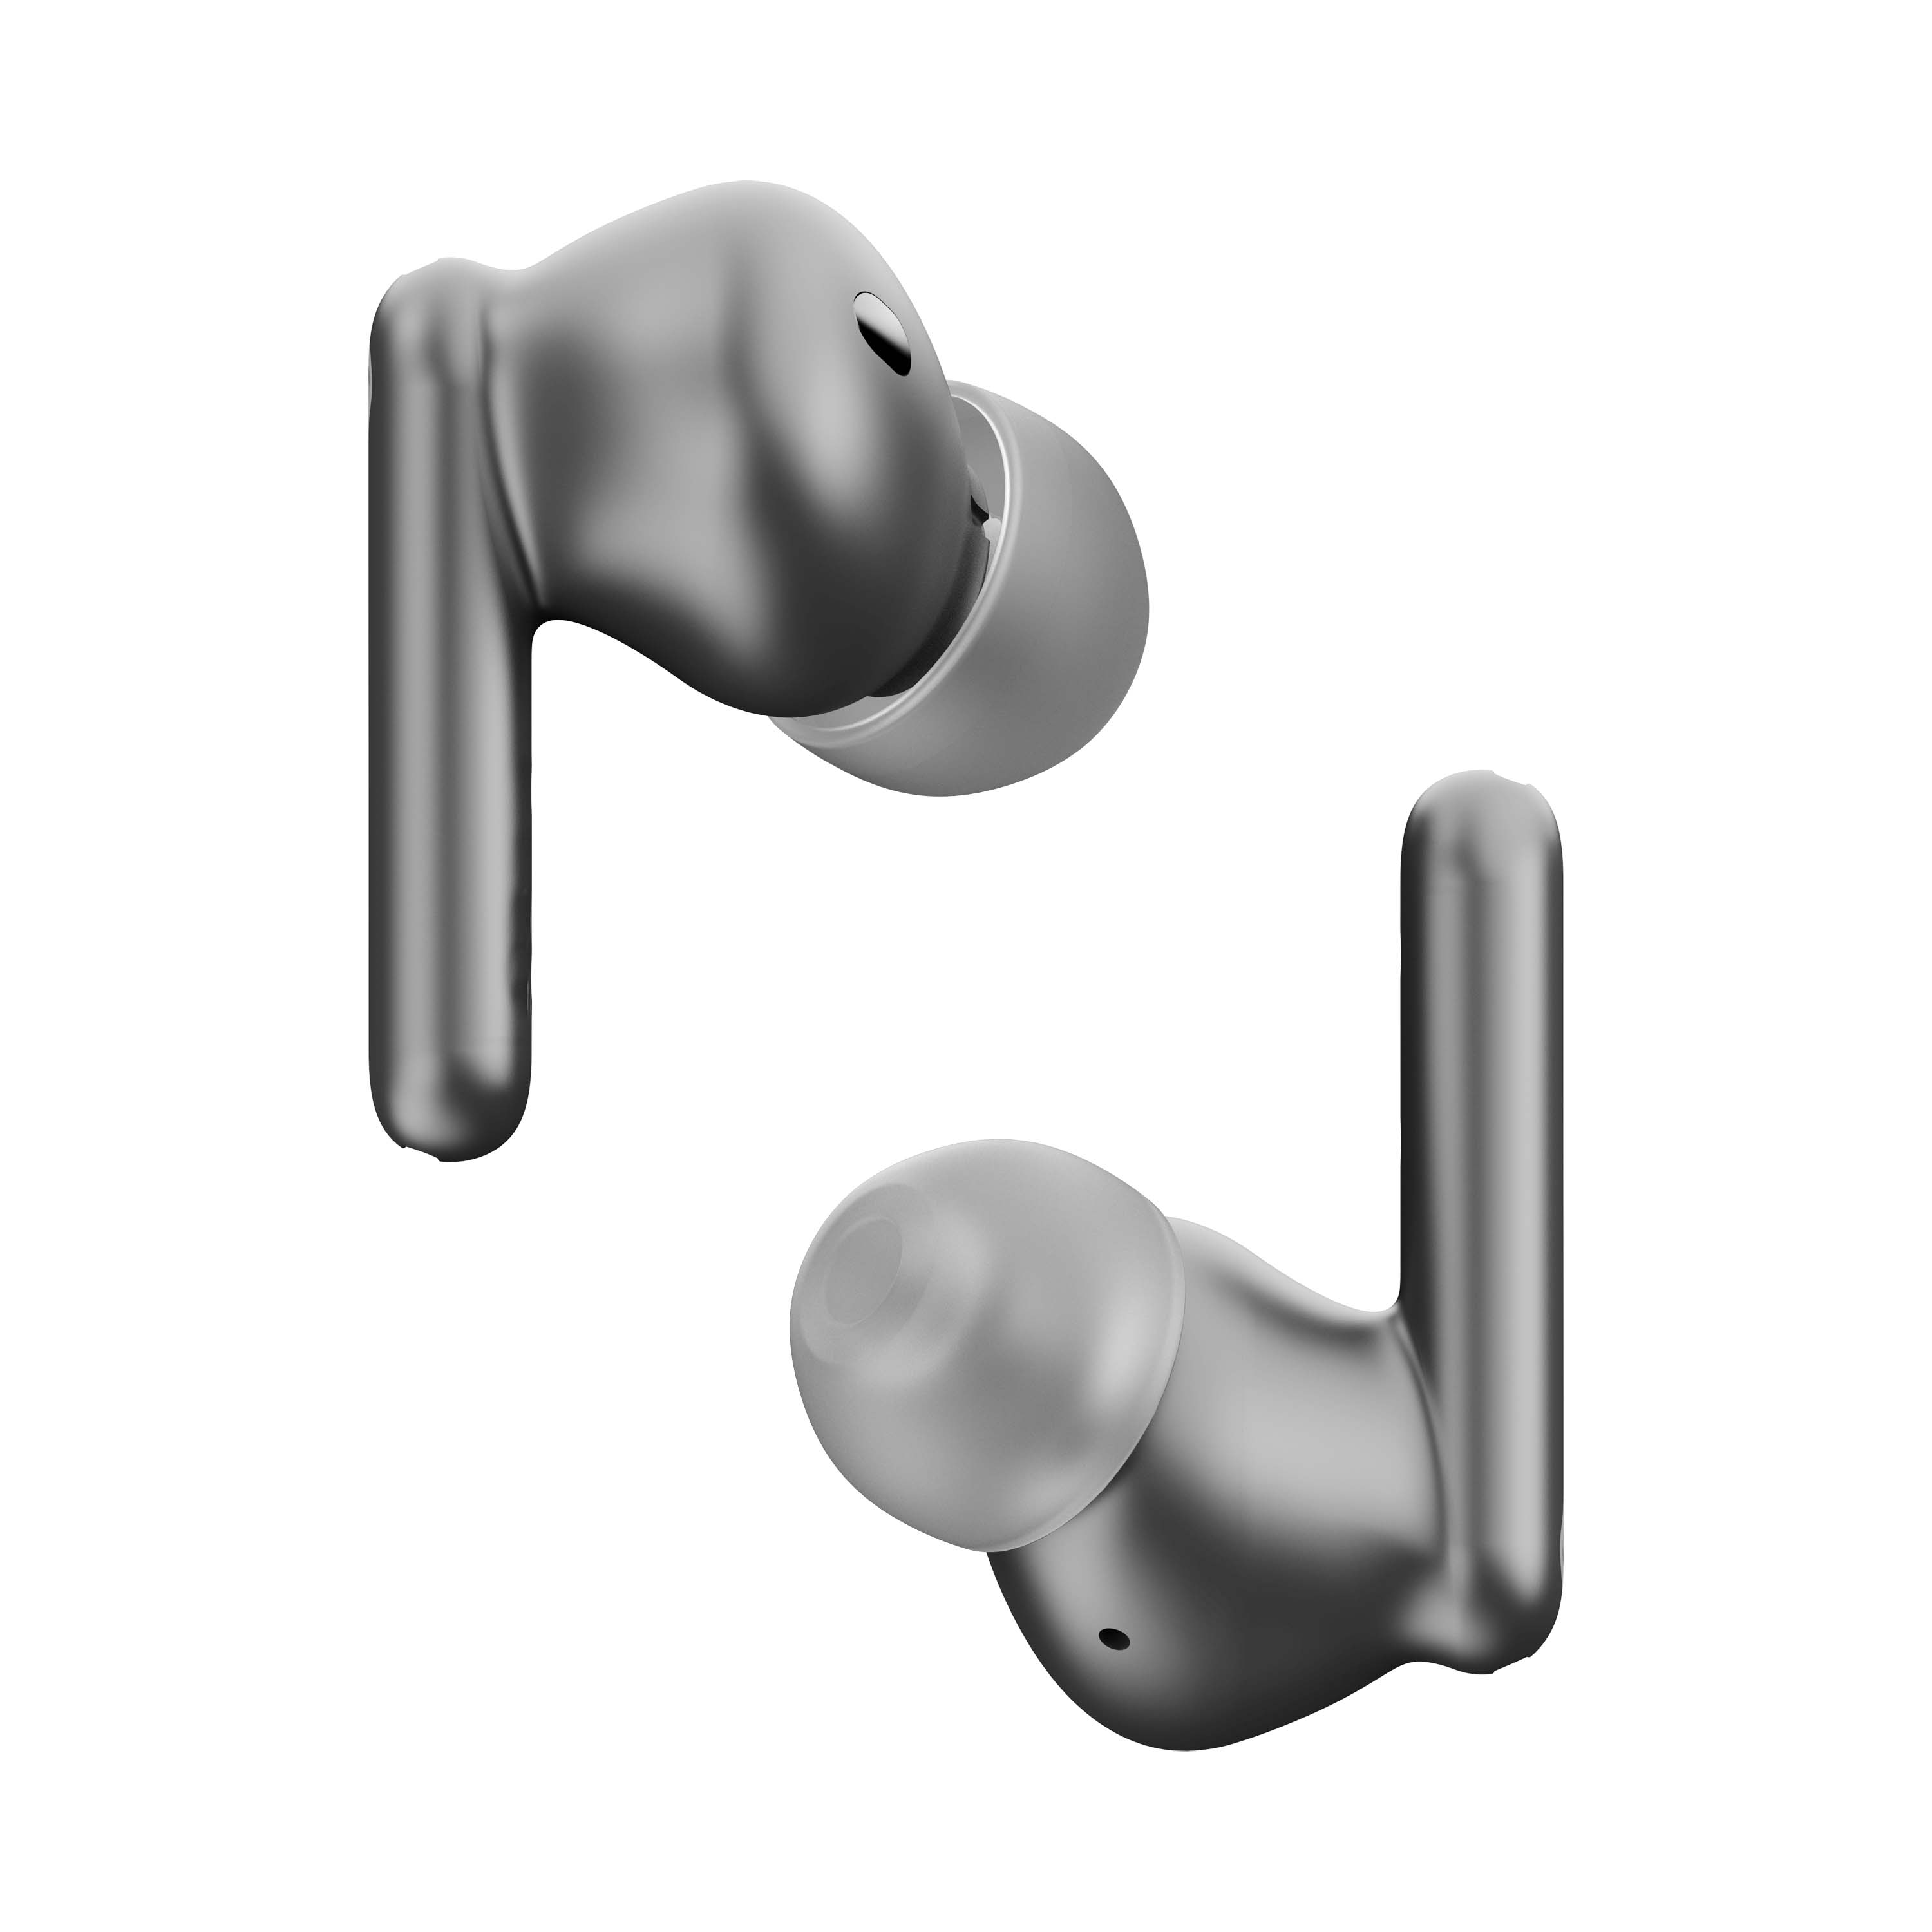 URBANISTA London, In-ear In-Ear Titanium Headphones Wireless 